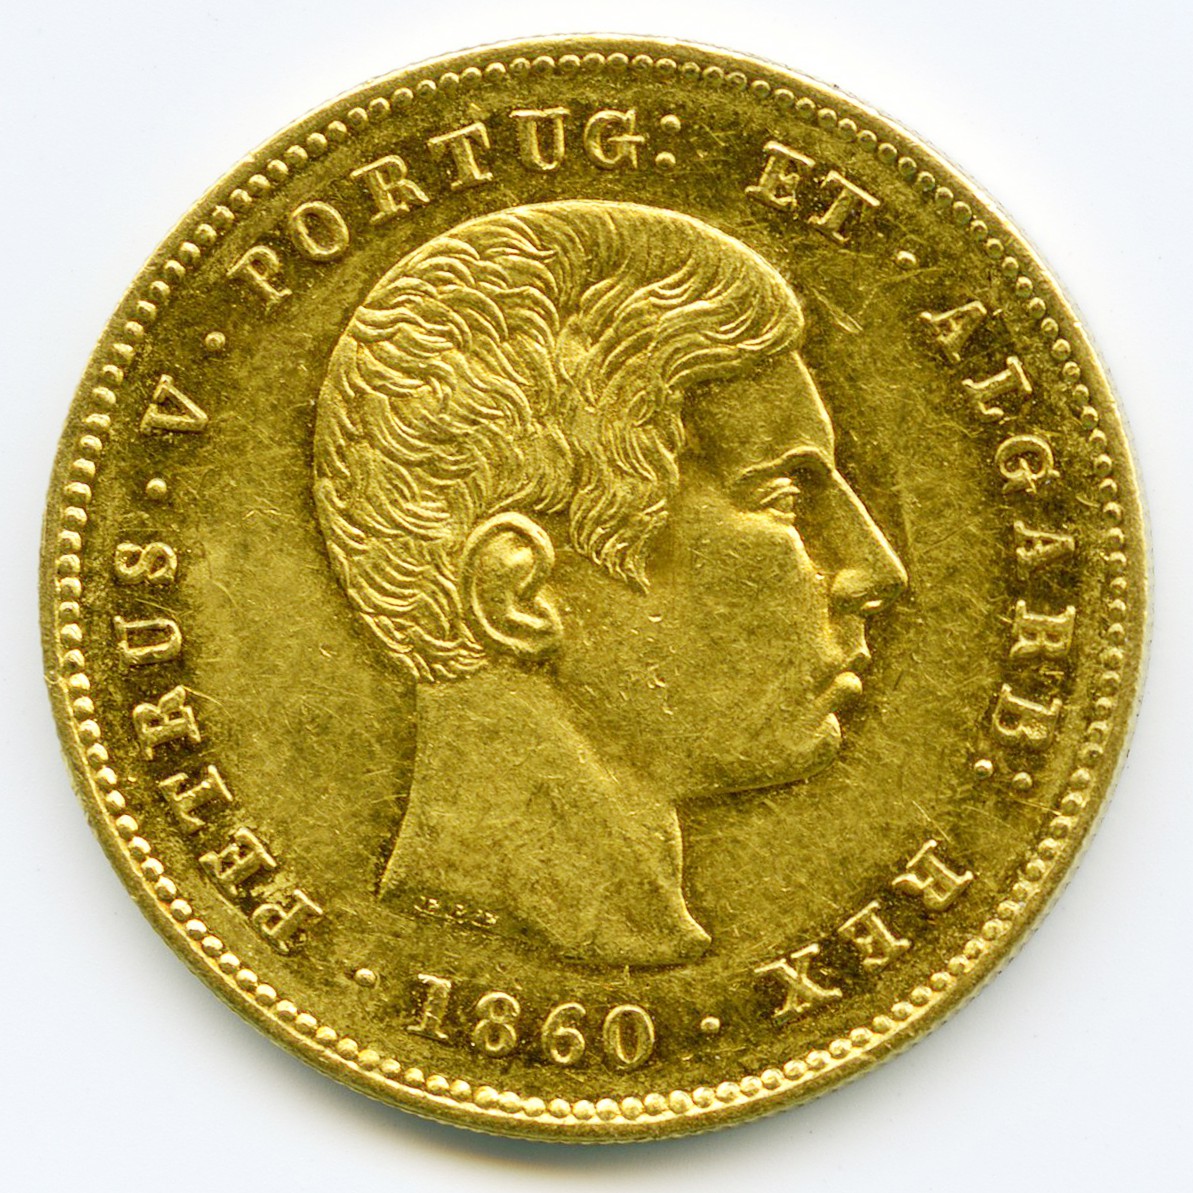 Portugal - 5 000 Reis - 1860 avers